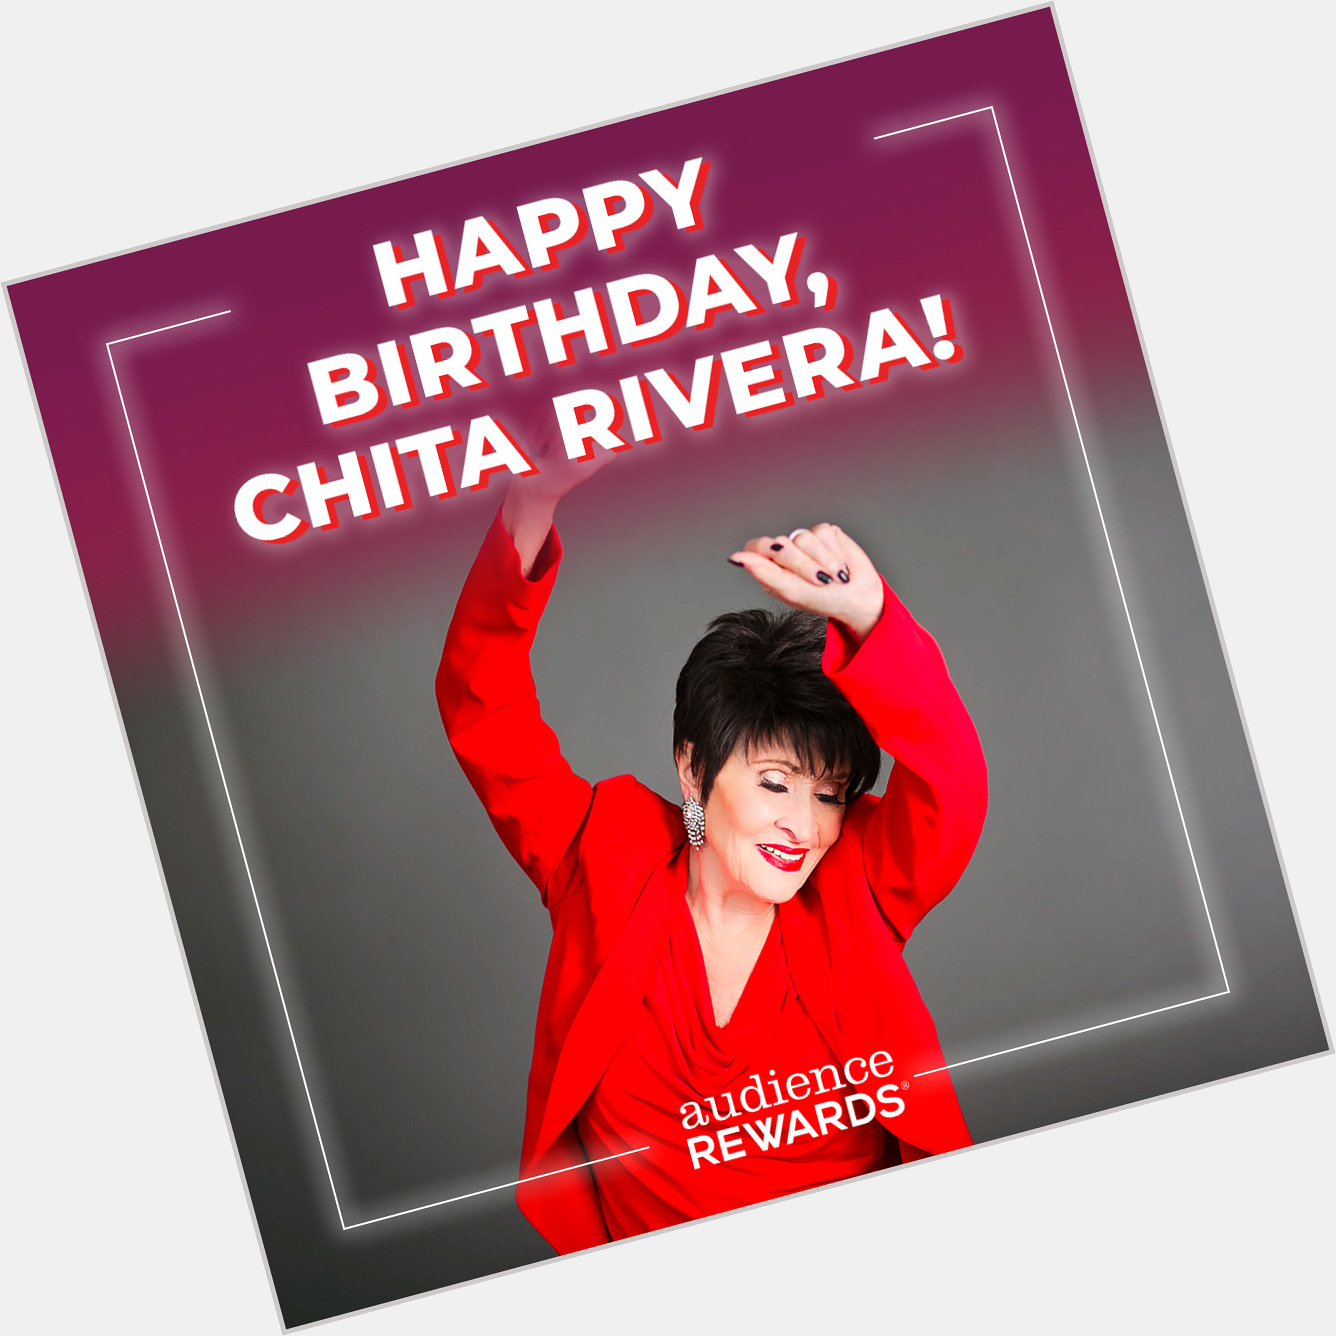 Happy 90th birthday to the legendary Chita Rivera! 